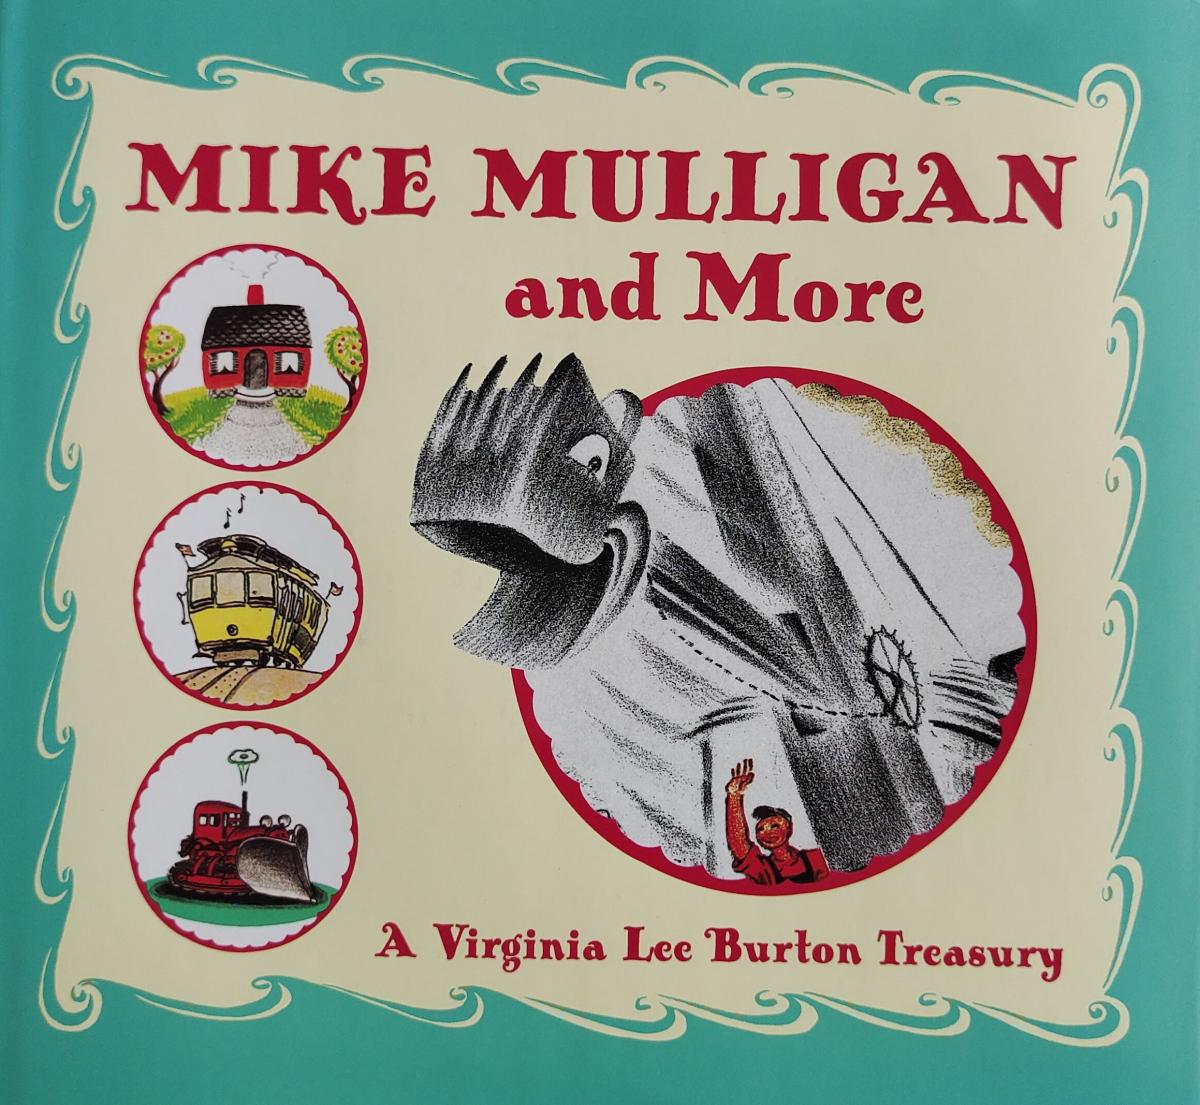 Mike milligan steam shovel фото 16